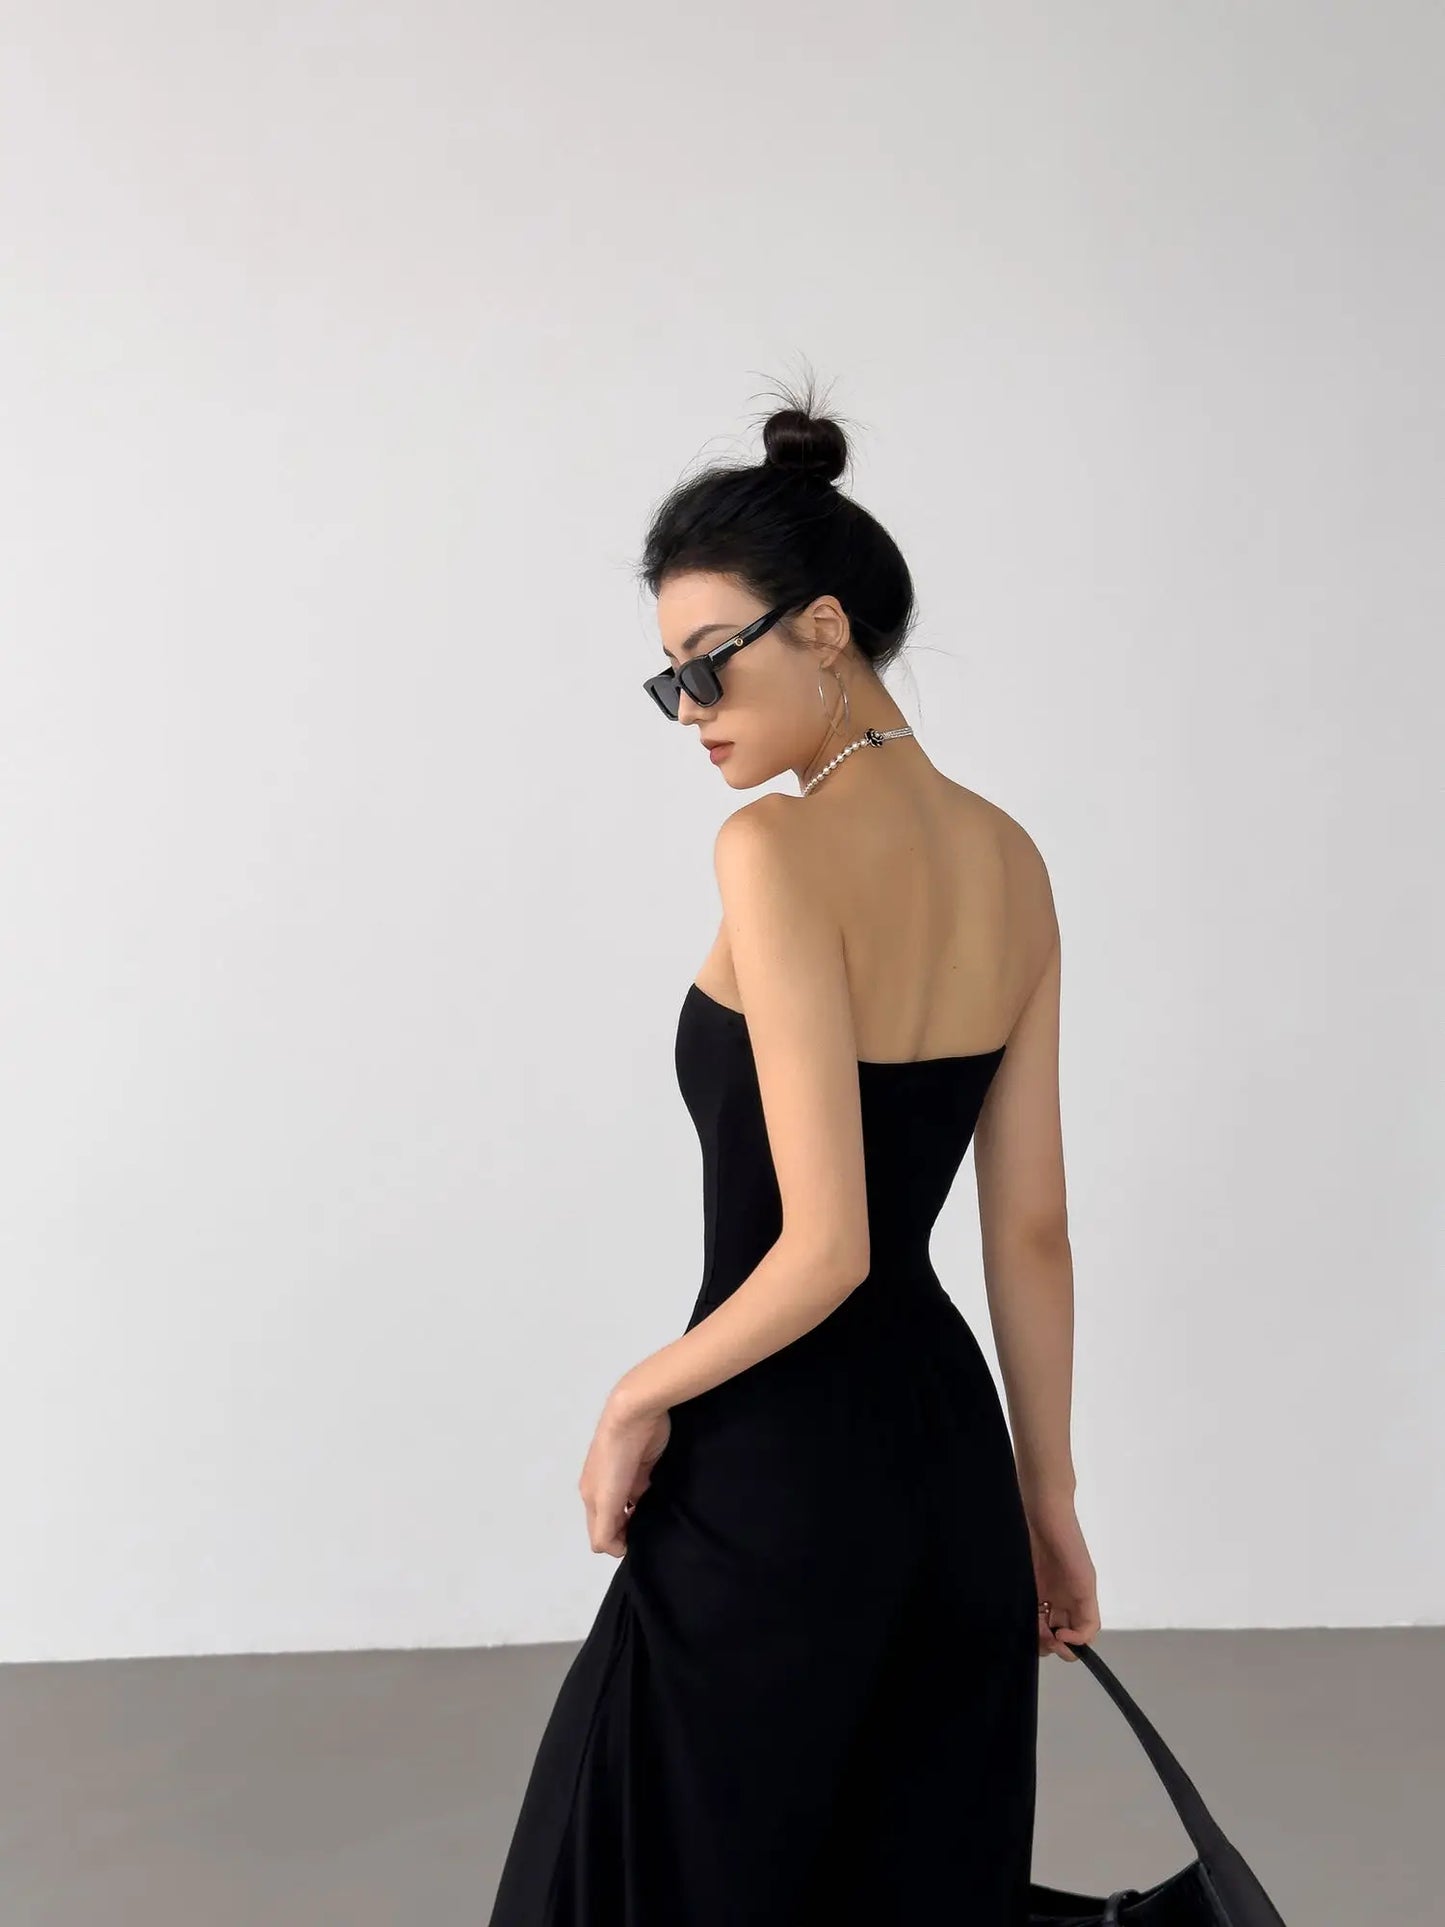 Retro Loose Style Black Elegant Jumpsuits For Women